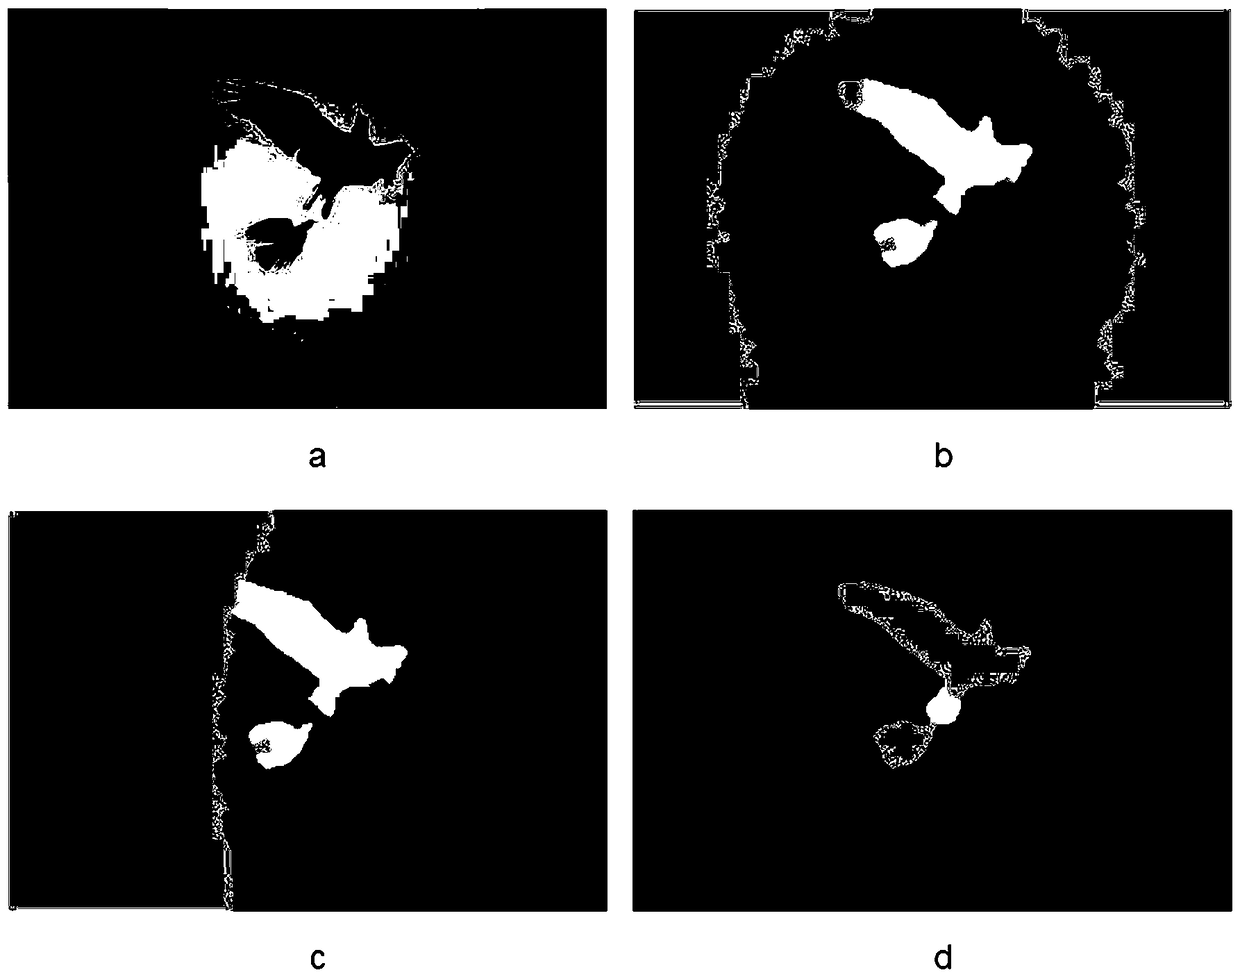 Neighbor Propagation Clustering Image Segmentation Method Based on Fuzzy Connectivity